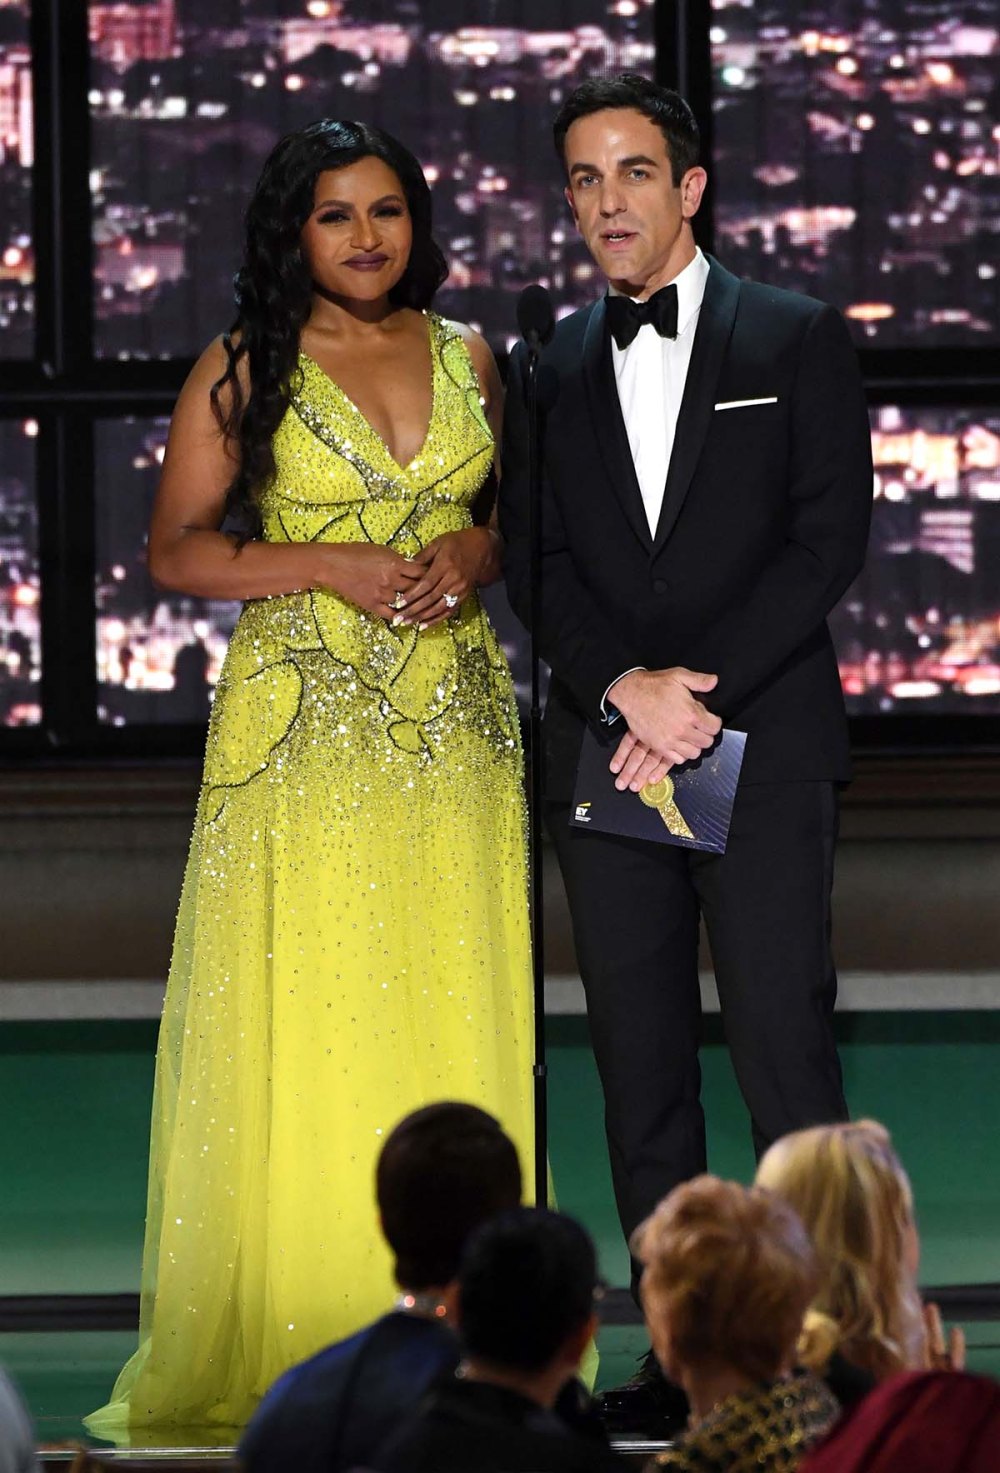 Mindy Kaling and B. J. Novak Joke About 'Complicated' Costar Romances at Emmys